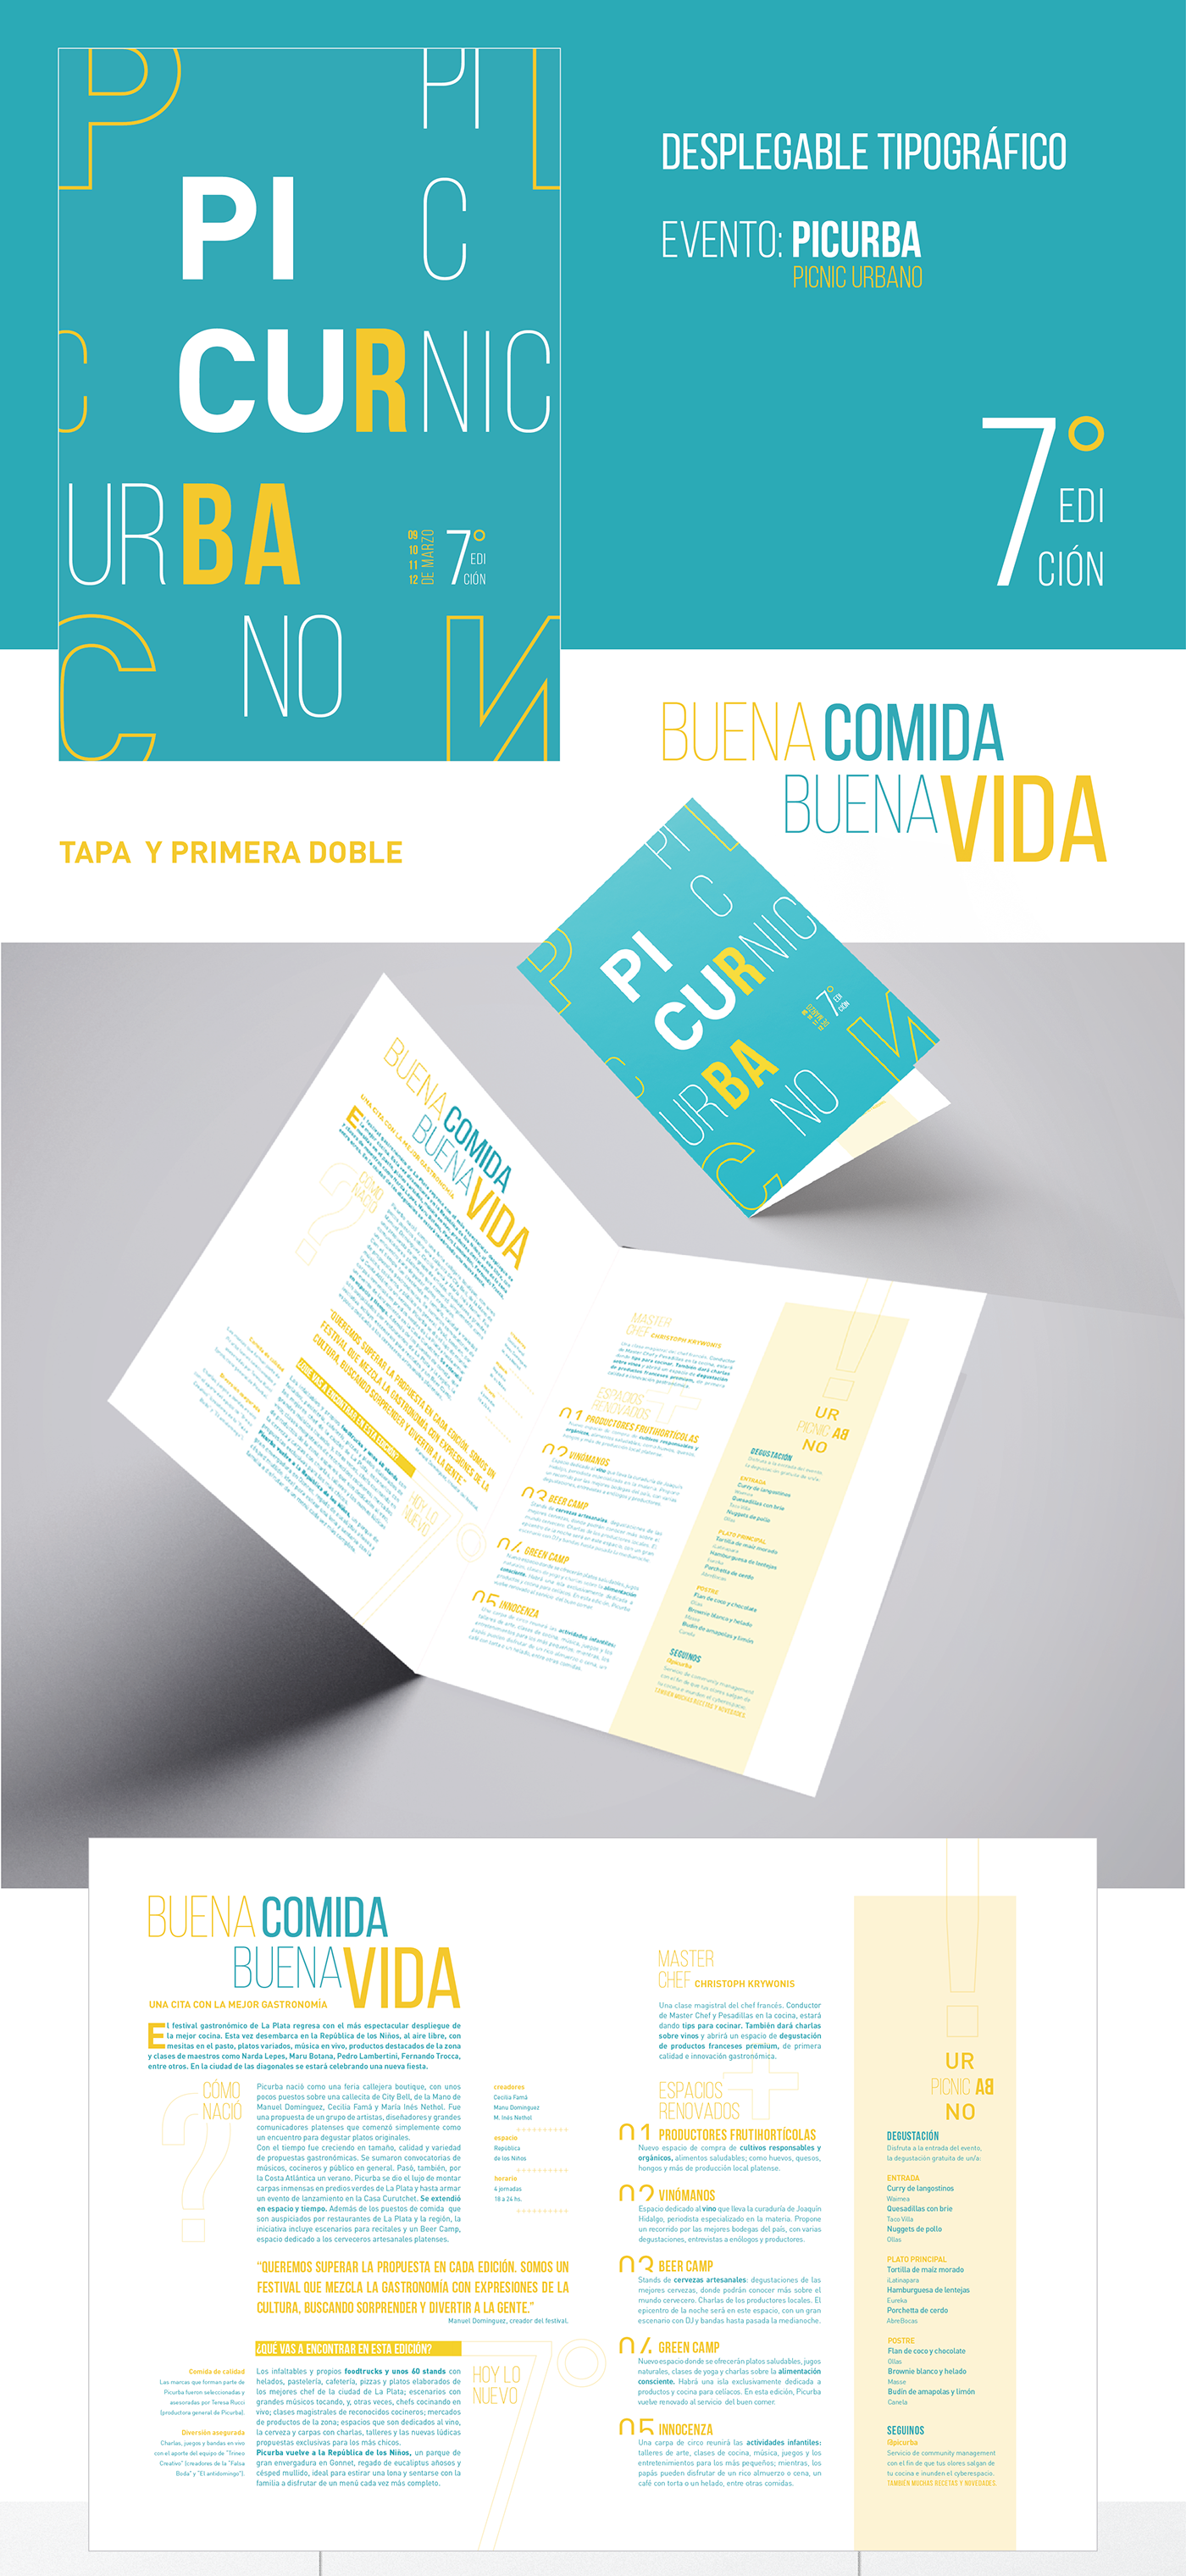 editorial diseño gráfico Tipografia 2 desplegable uade typography   grapich design picnic flyer folleto